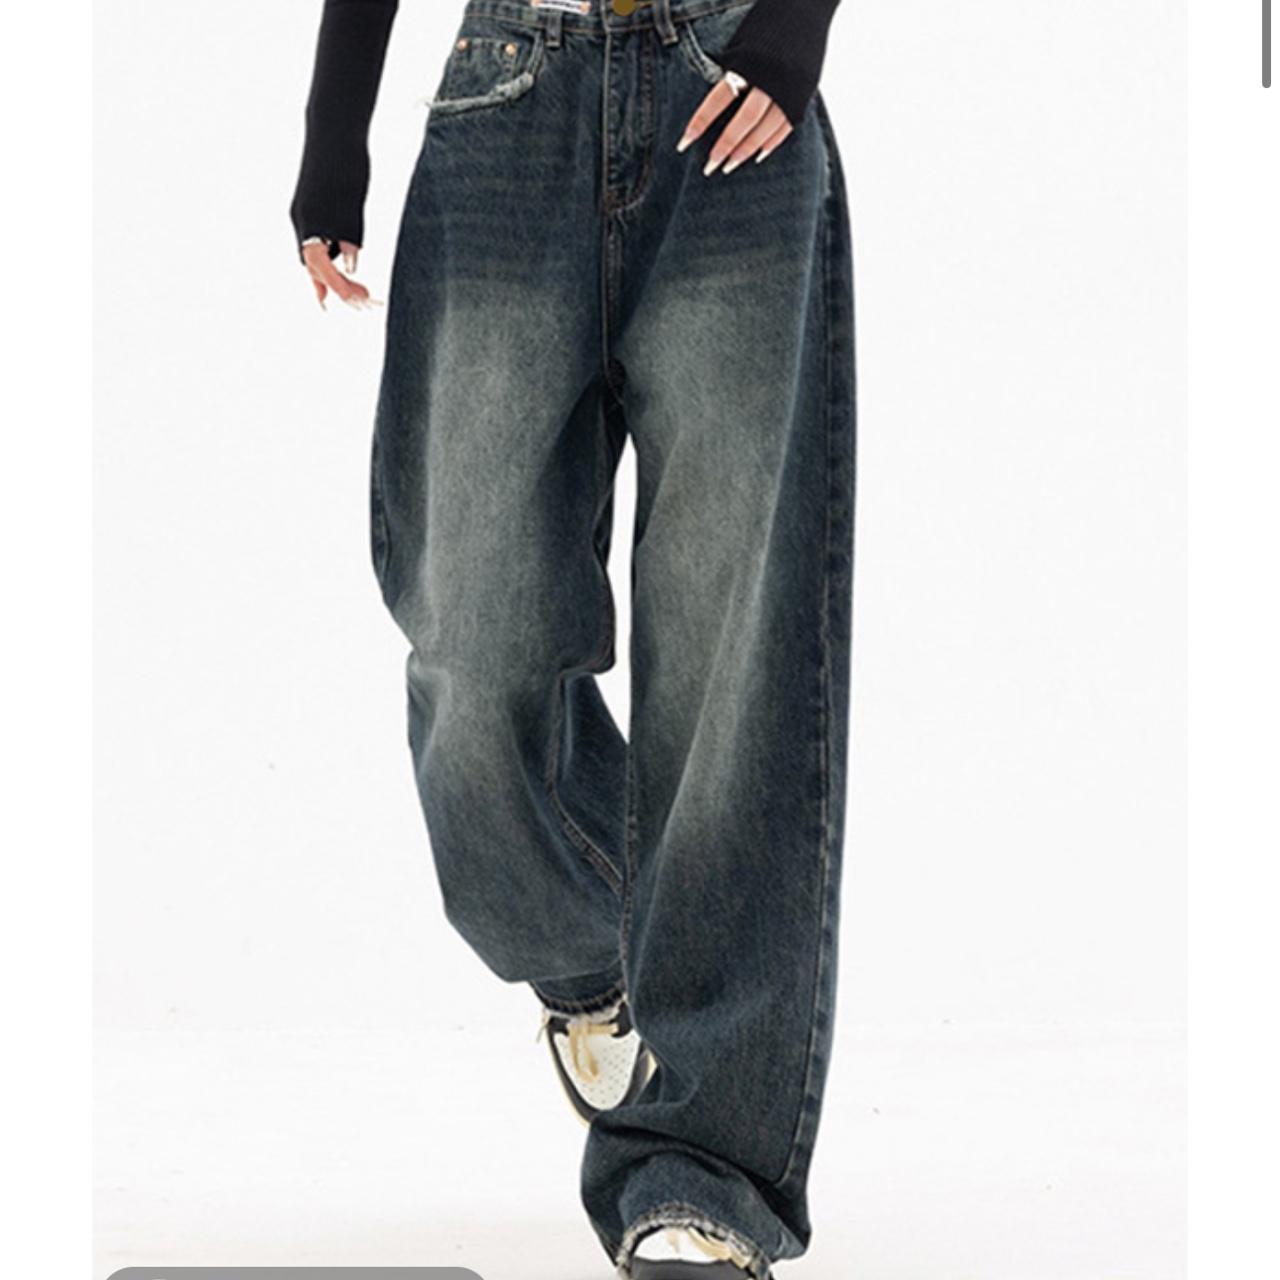 Baggy denim jeans size 6 fit oversized- can fit a... - Depop